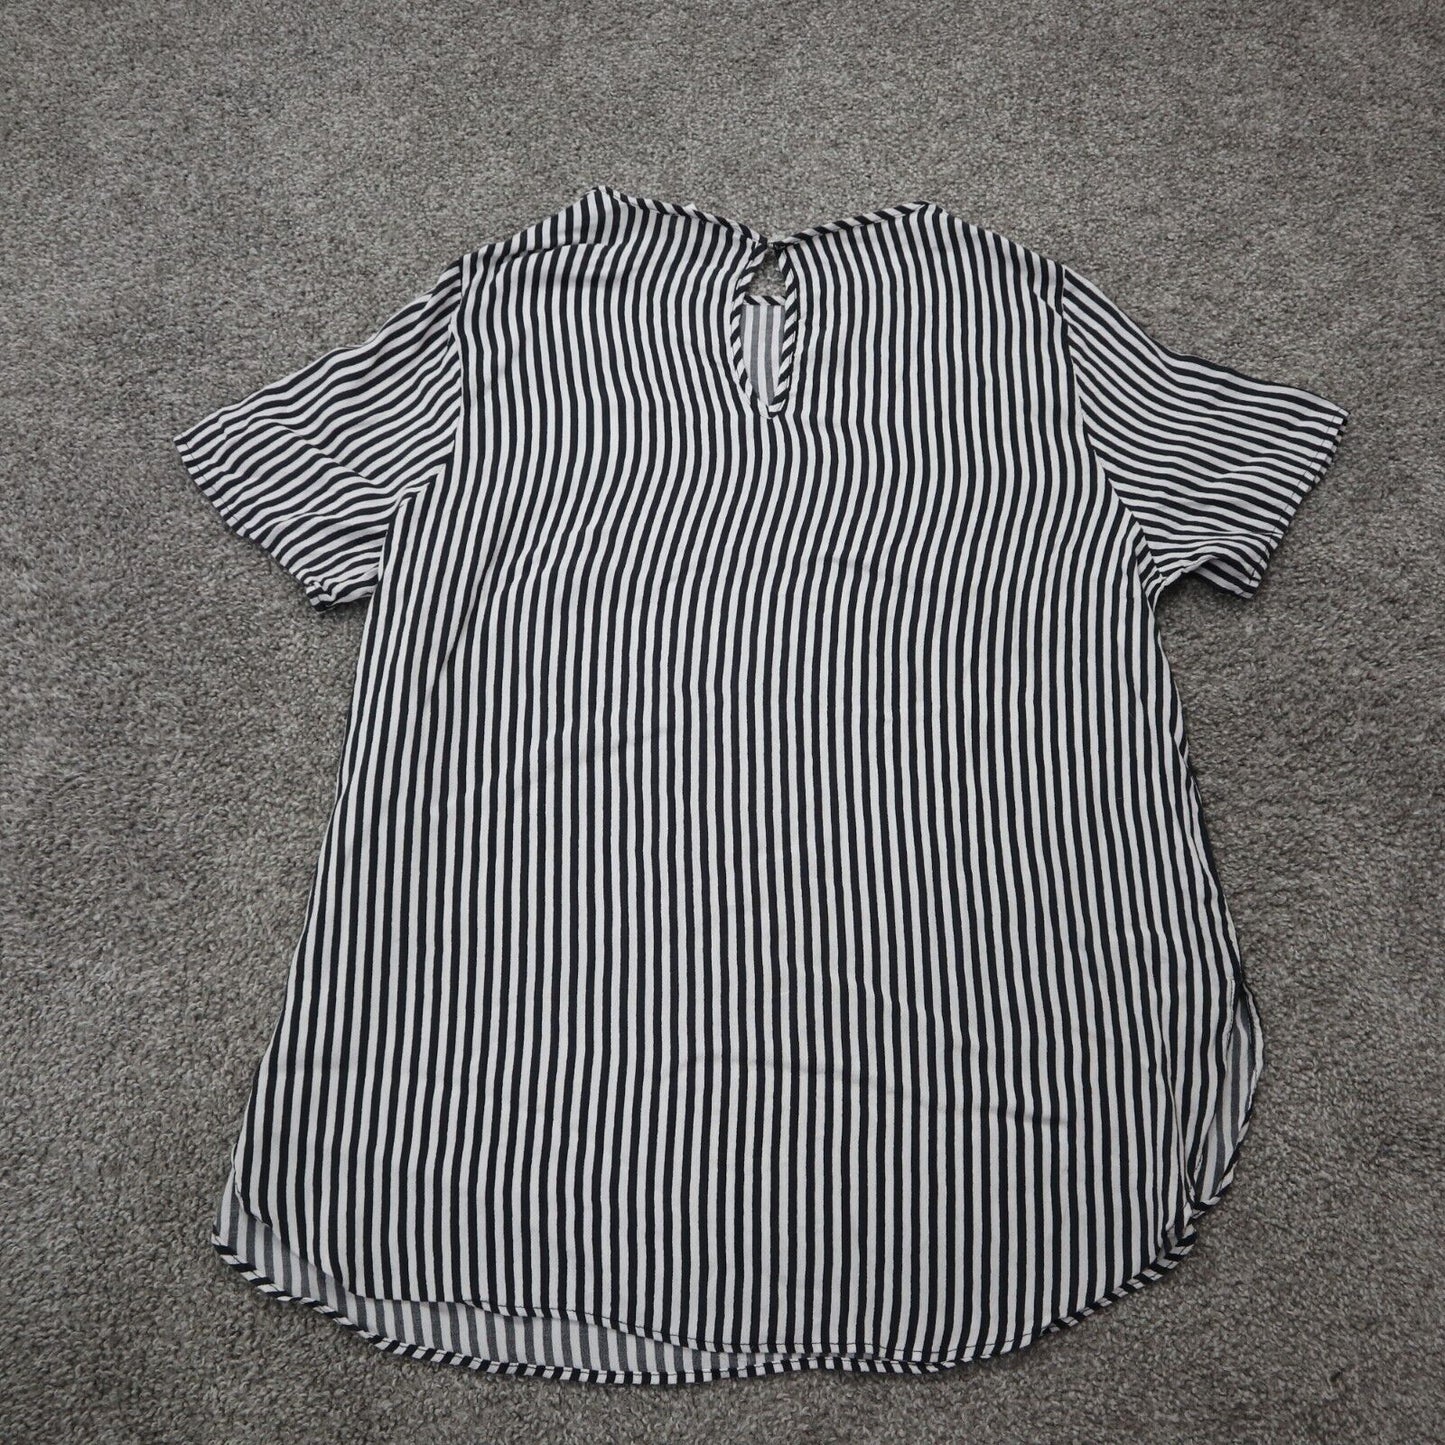 Unbranded Womens Striped Blouse Shirt Short Sleeves Round Neck Black White SZ 14